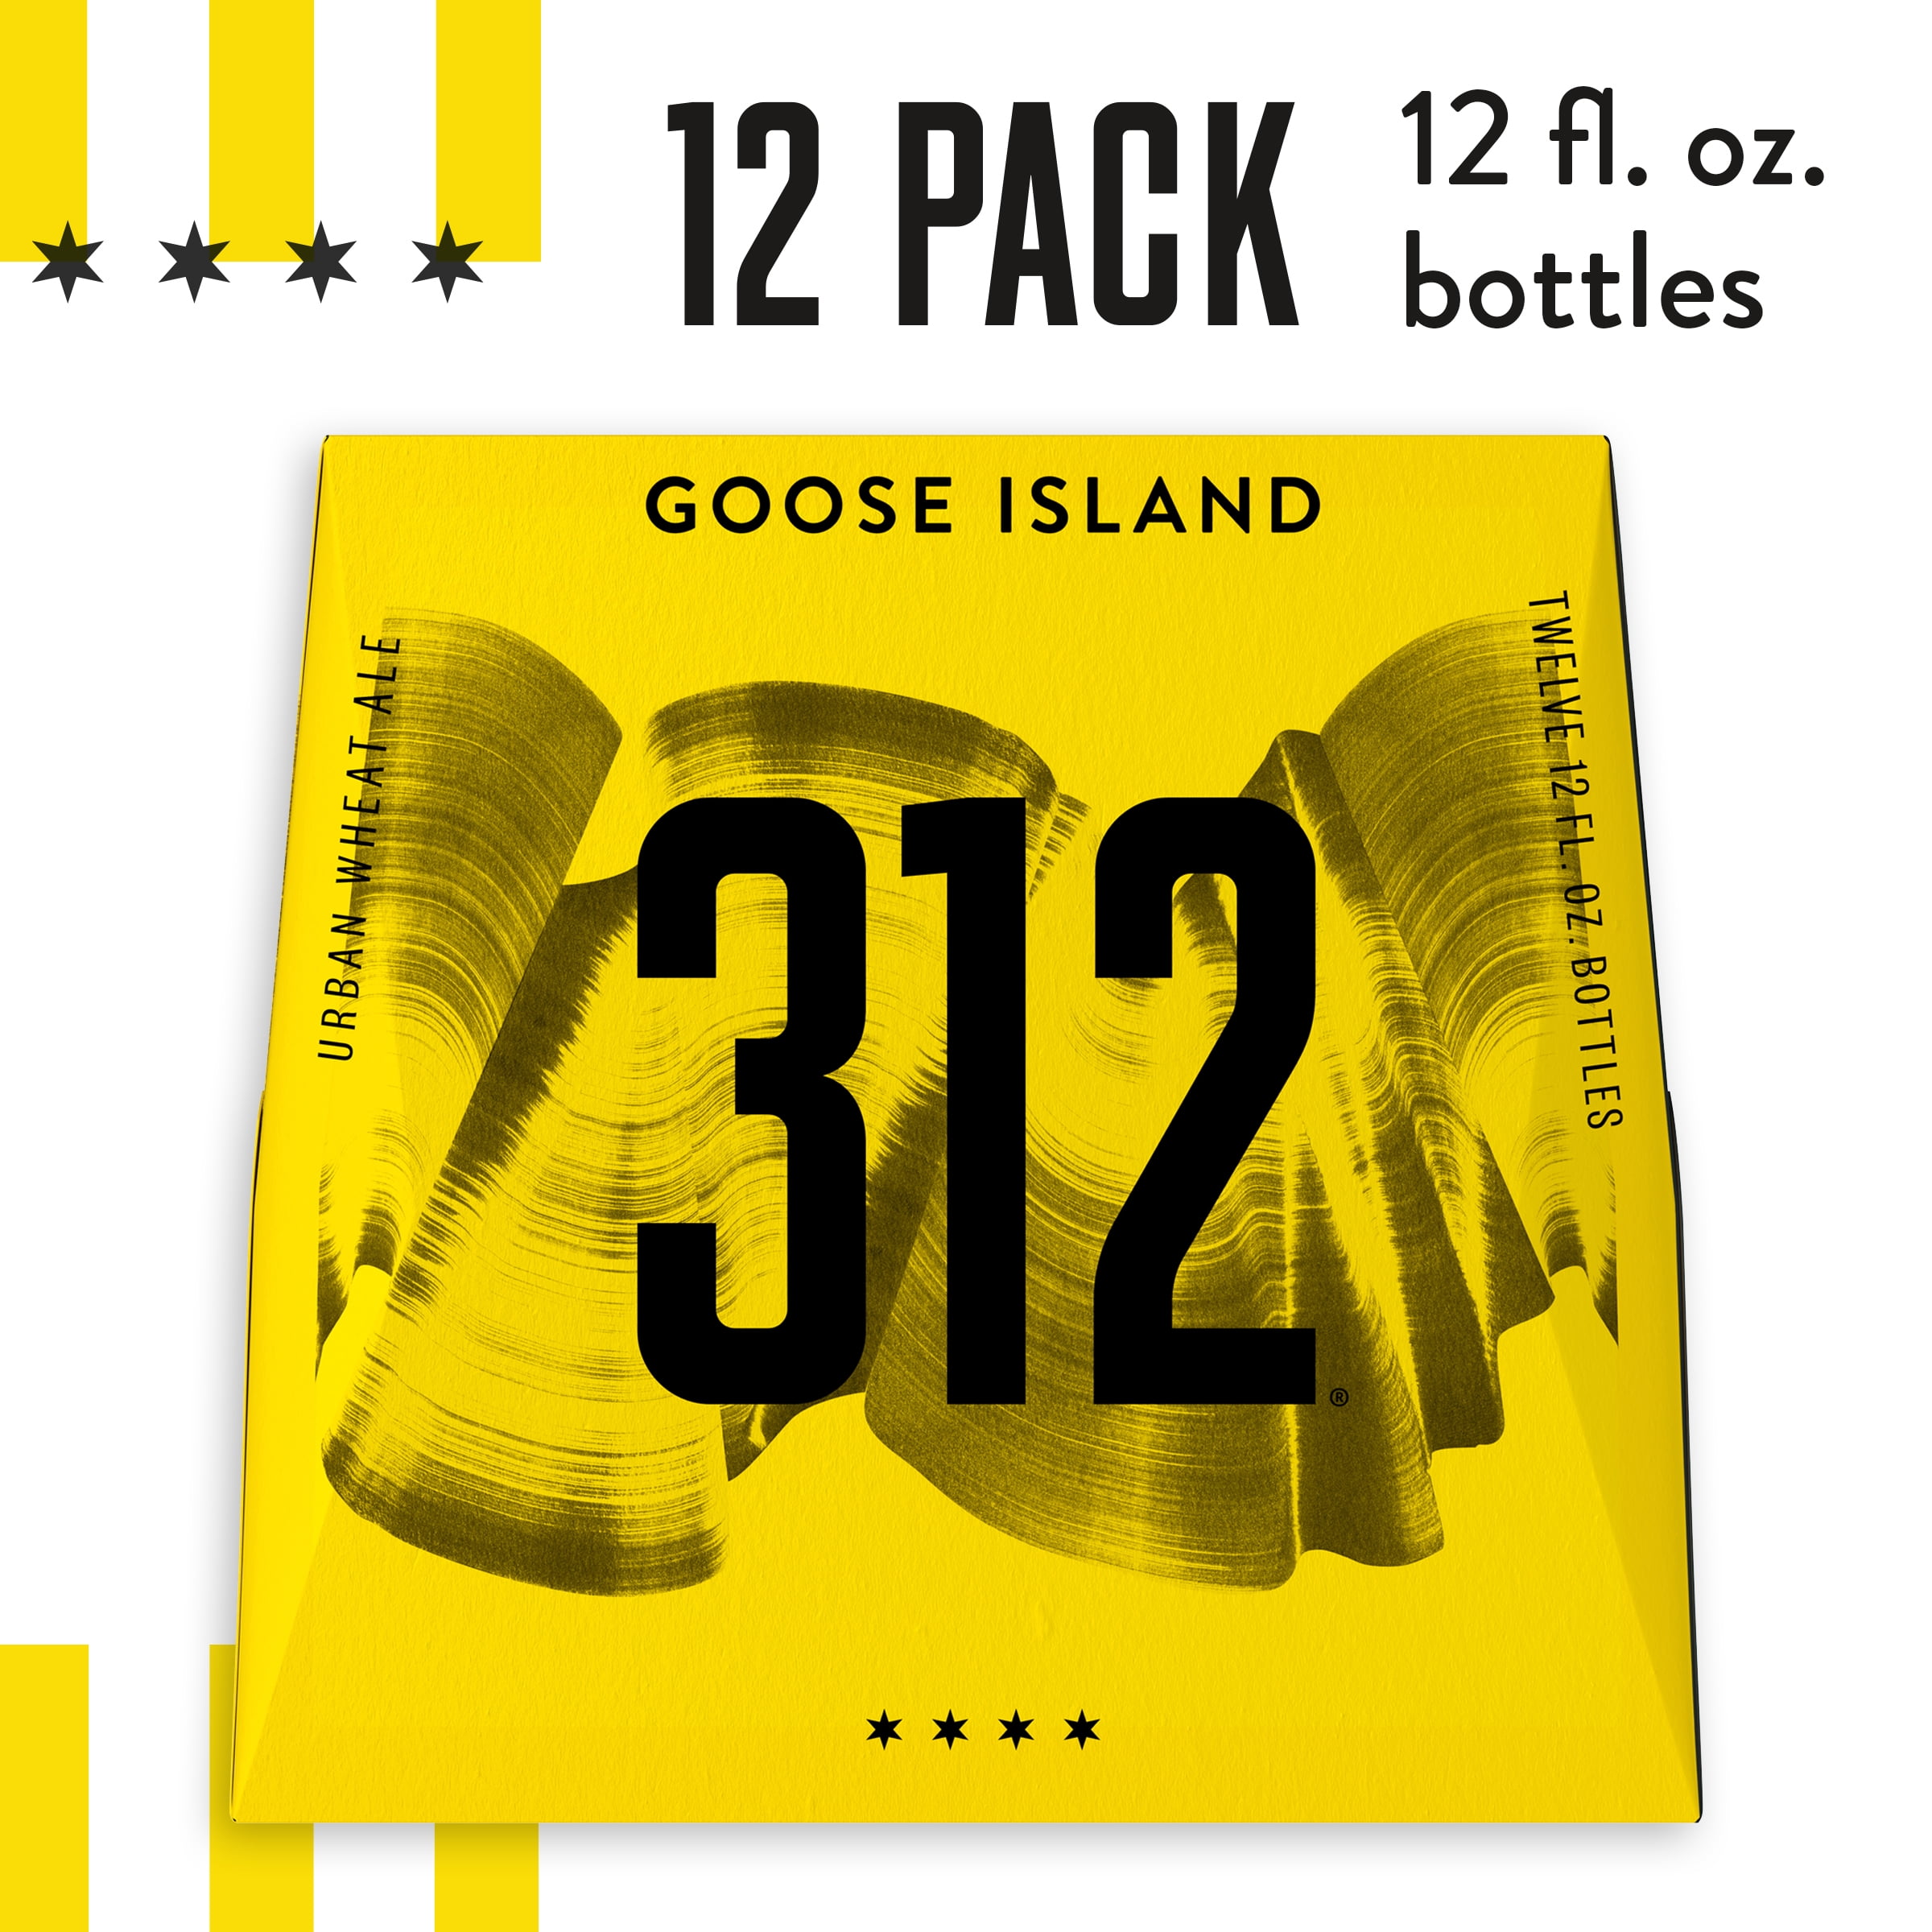 Goose Island 312 Urban Wheat Ale Craft Beer 12 Pack Beer 12 Fl Oz Bottles Walmart Com Walmart Com